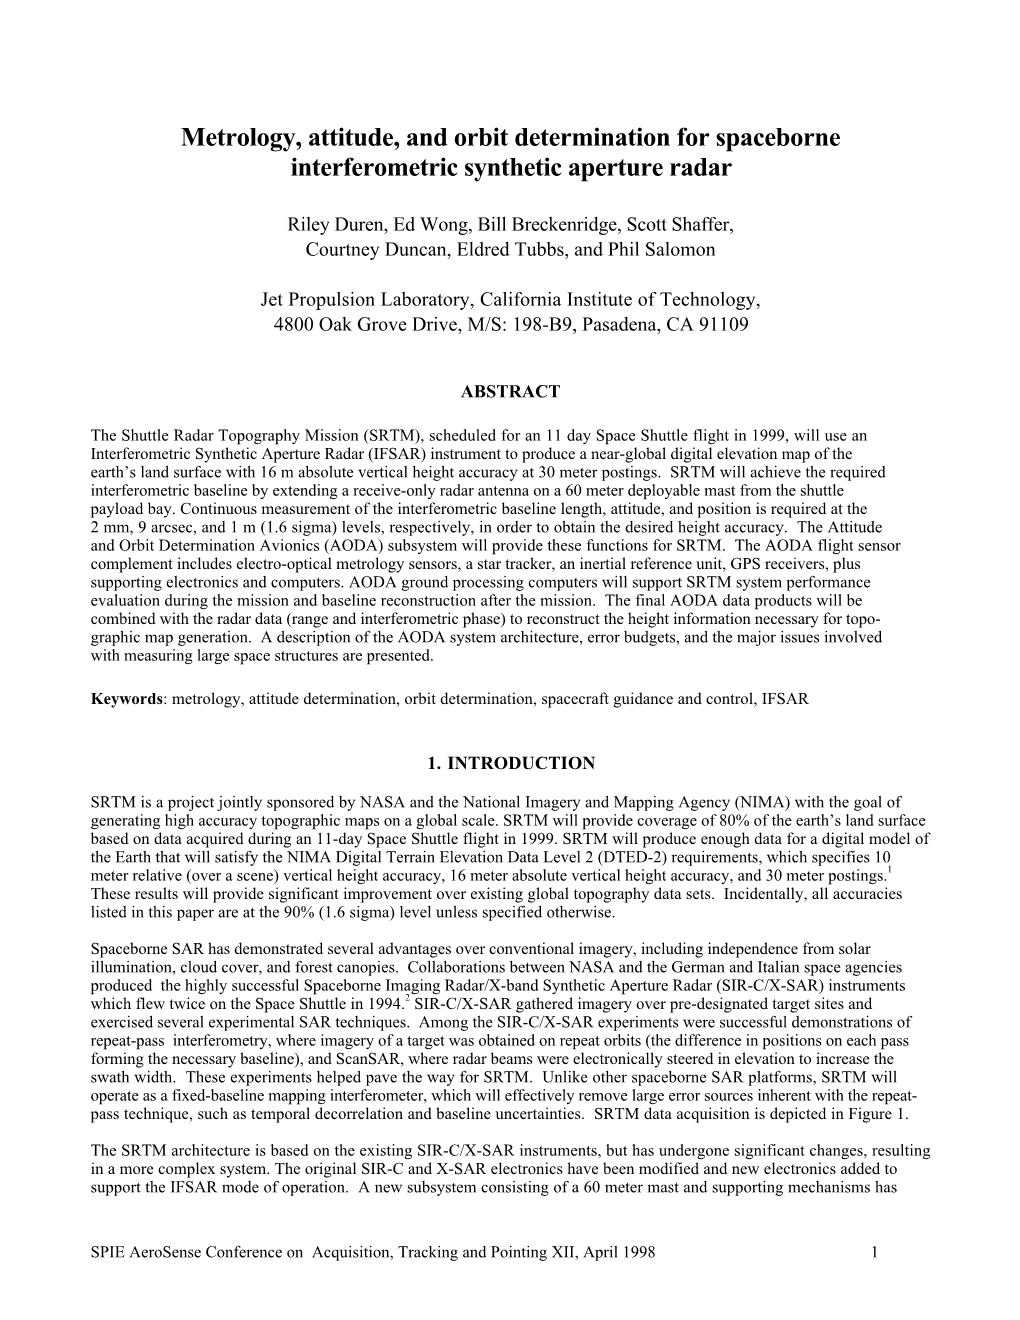 Metrology, Attitude, and Orbit Determination for Spaceborne Interferometric Synthetic Aperture Radar